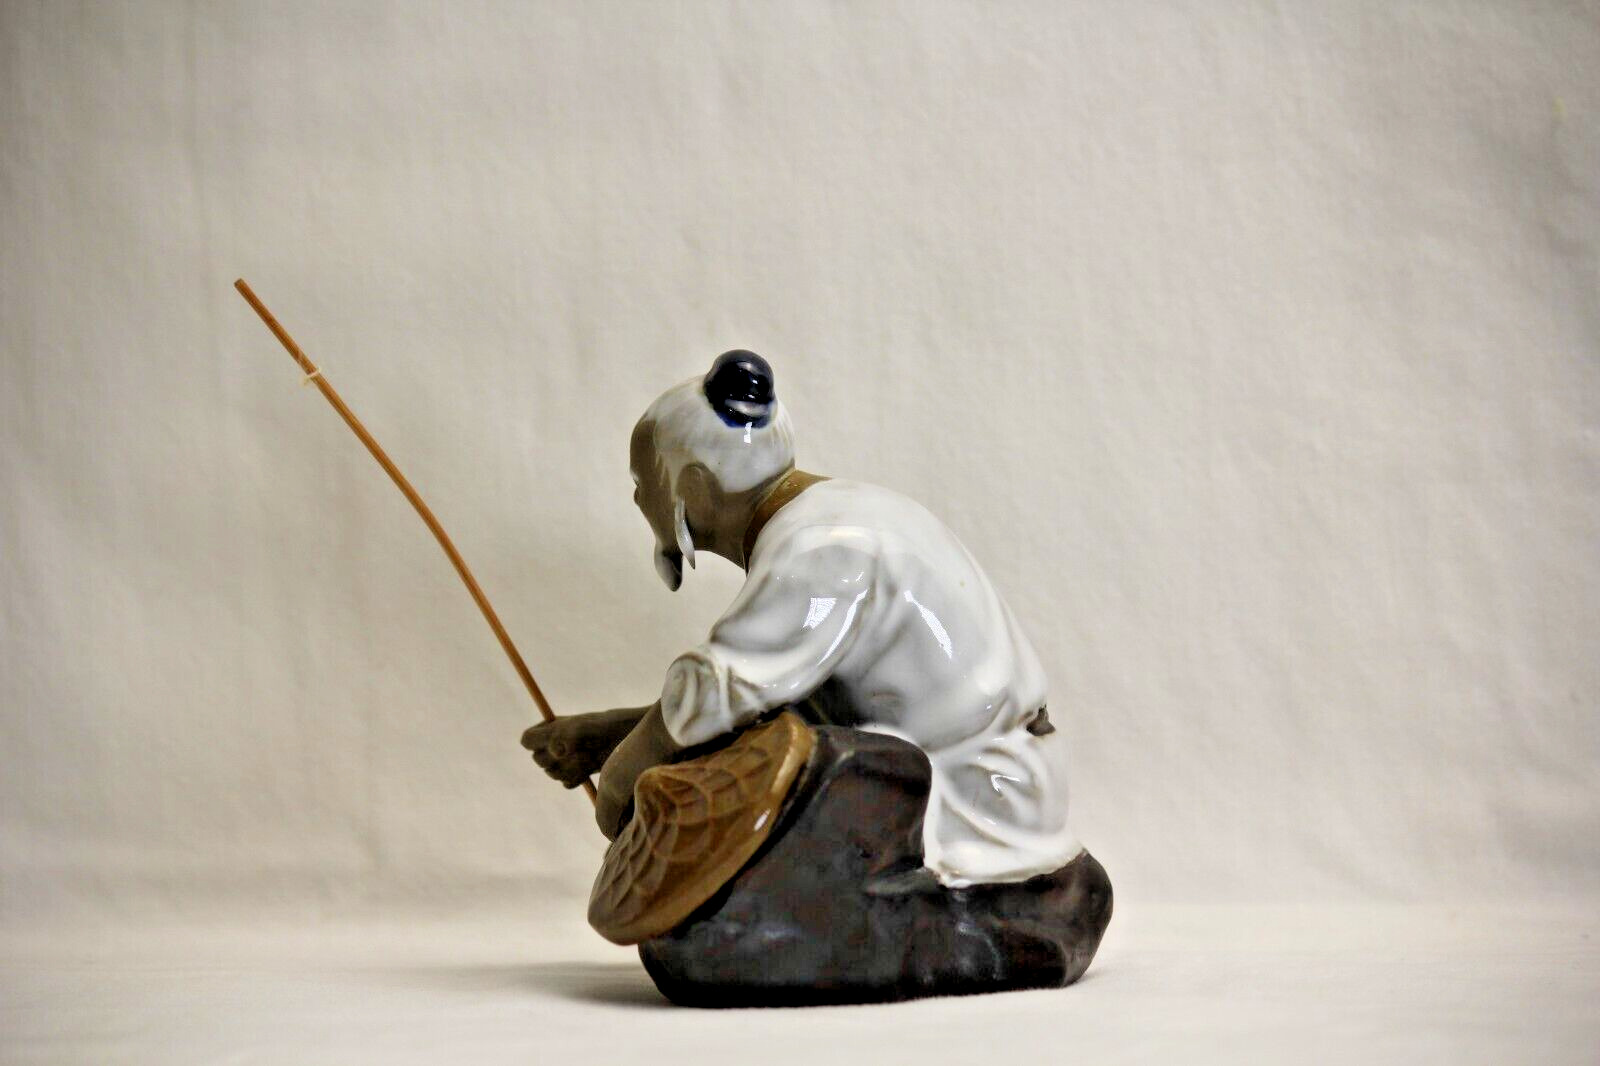  Chinese Ceramic Mudman Figurine Holding Fishing Pole Vintage